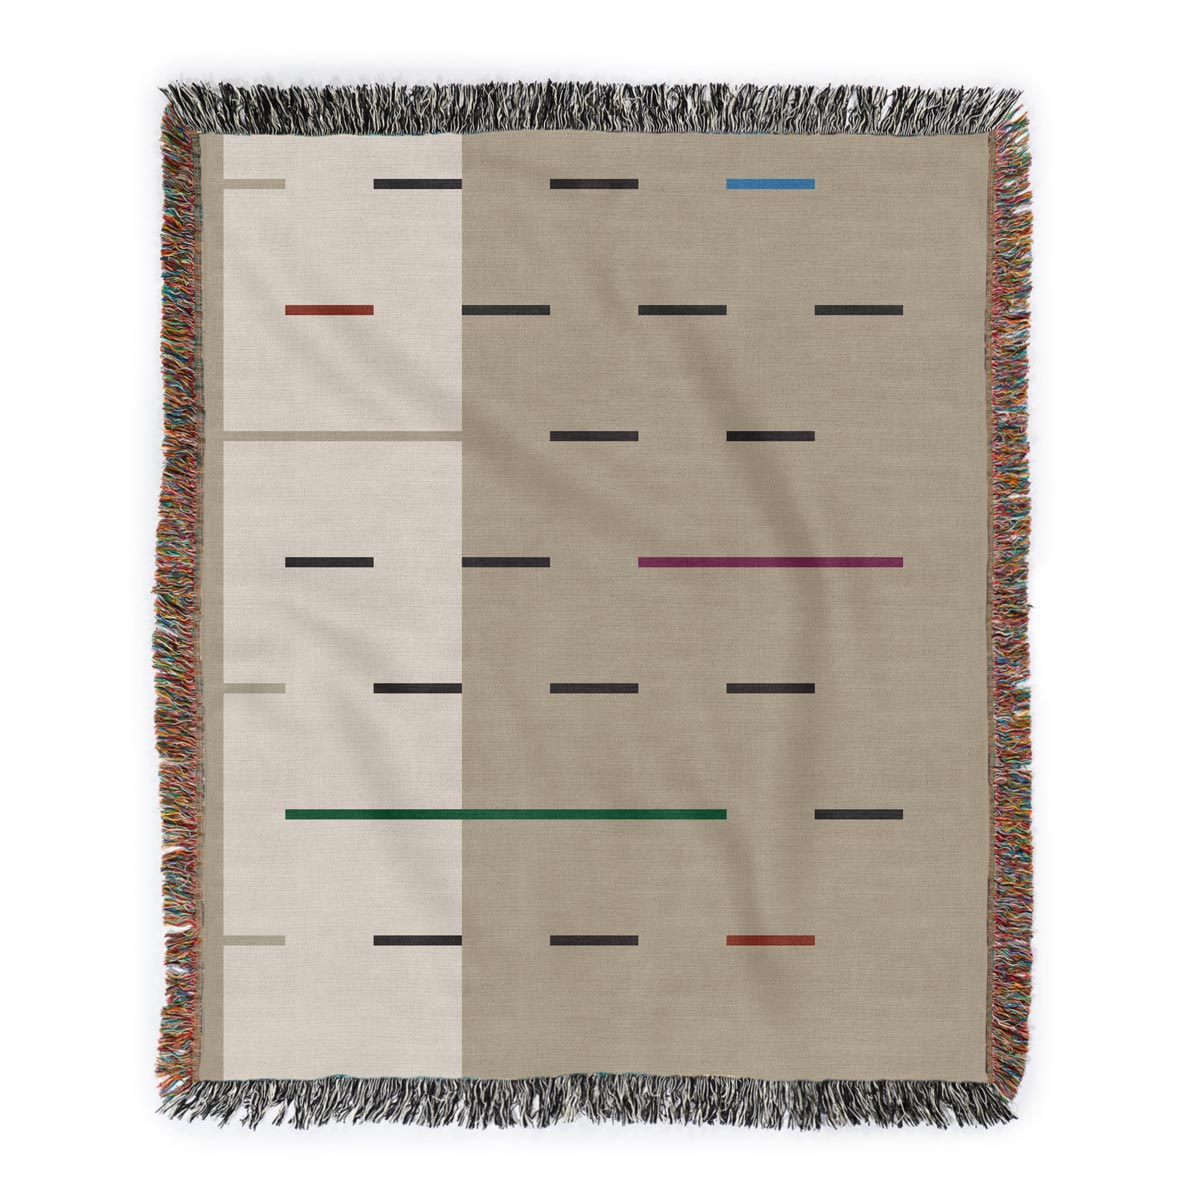 Fula IV (dunes) – earth tone striped woven throw blanket